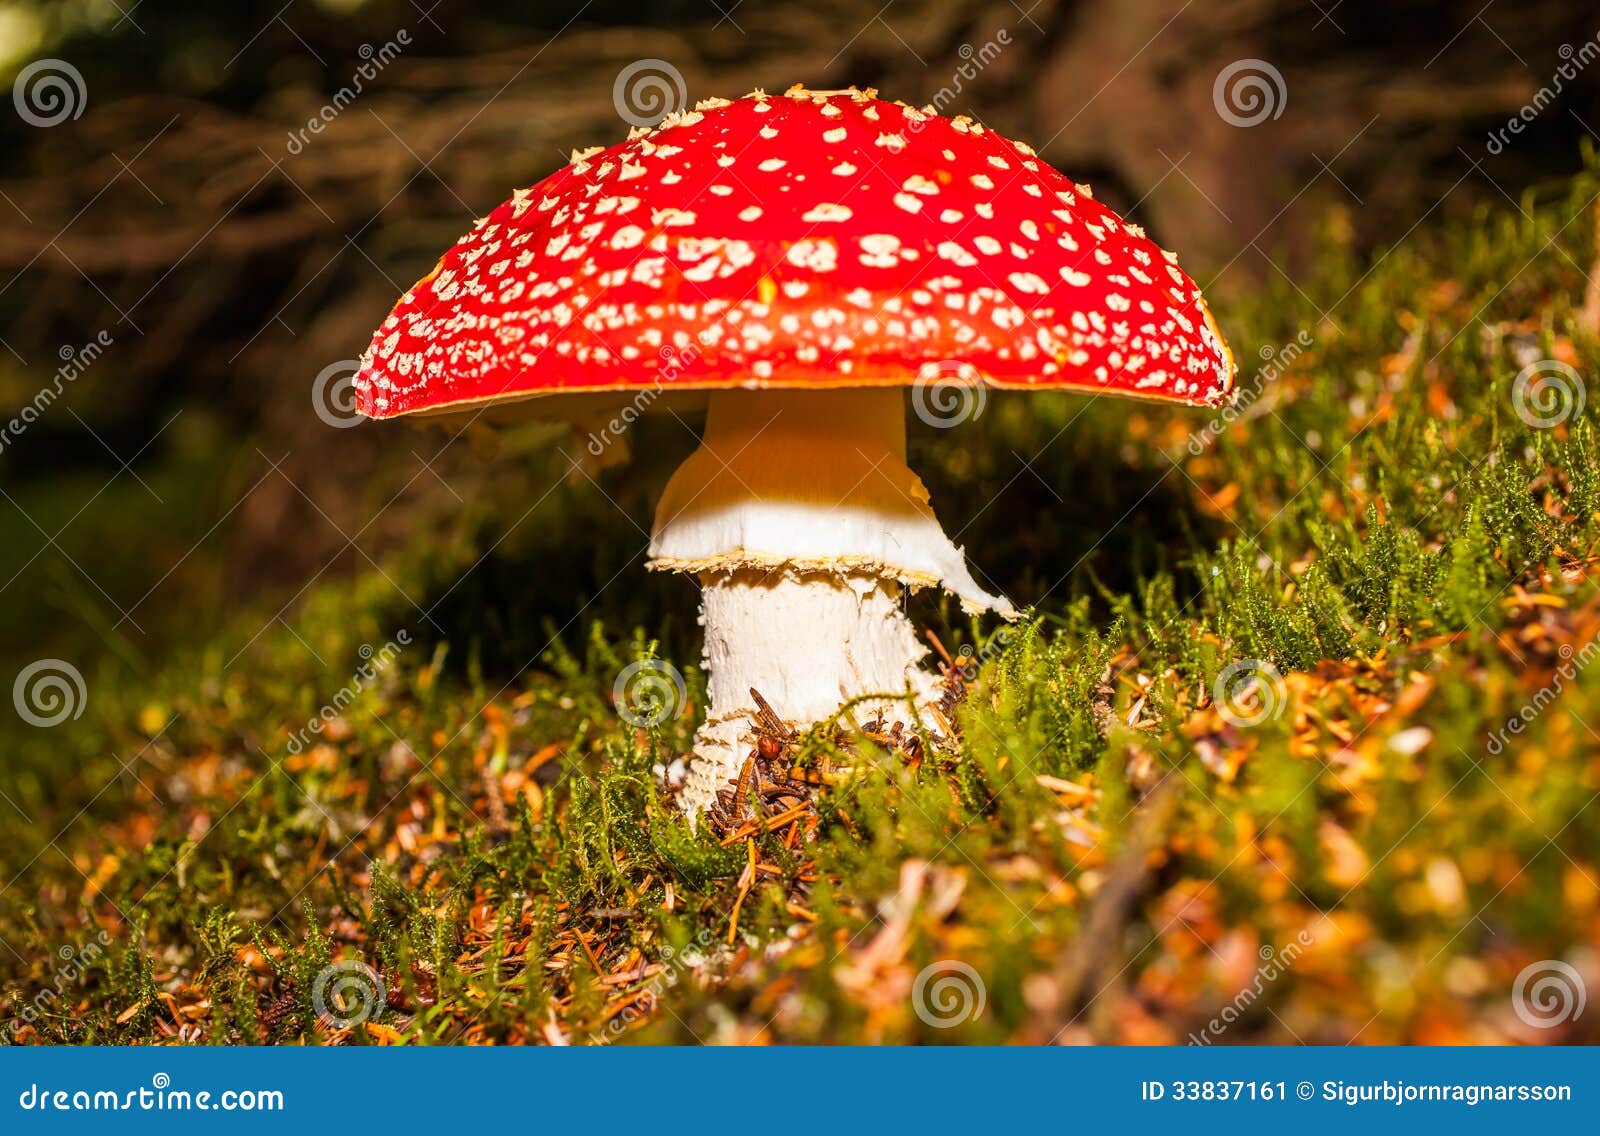 fly agaric mushroom